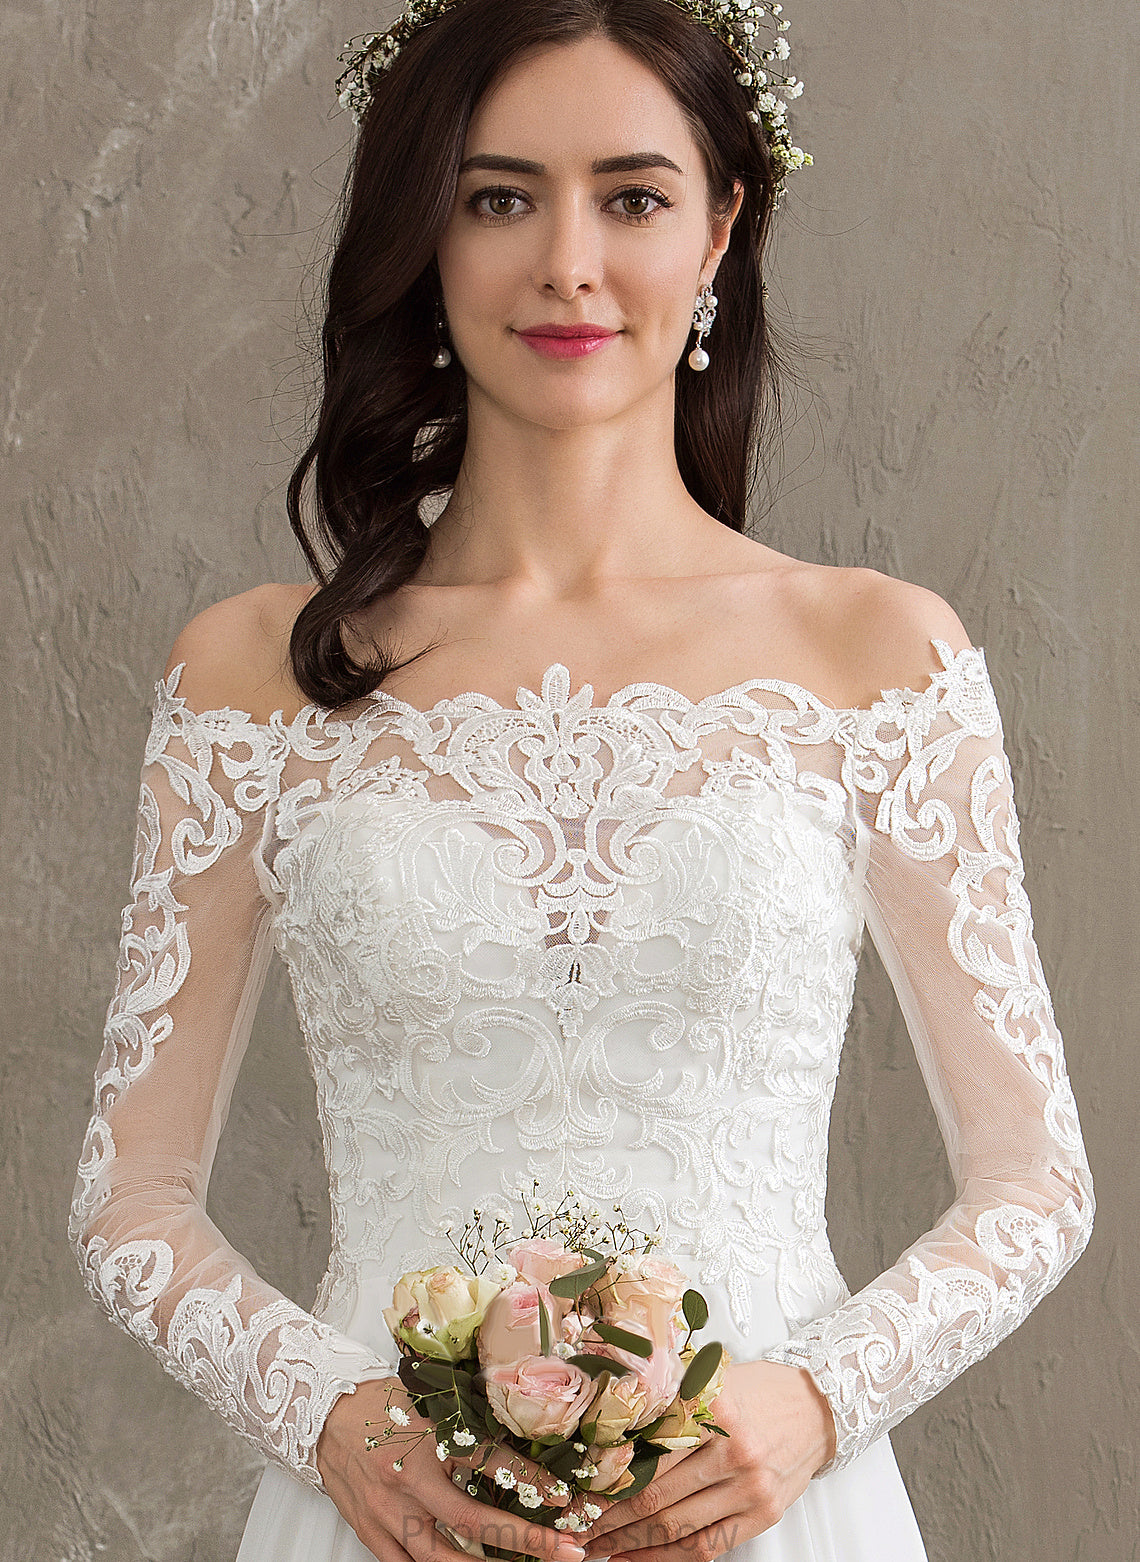 Floor-Length Dress Charity Wedding Dresses Off-the-Shoulder Chiffon Wedding A-Line Lace